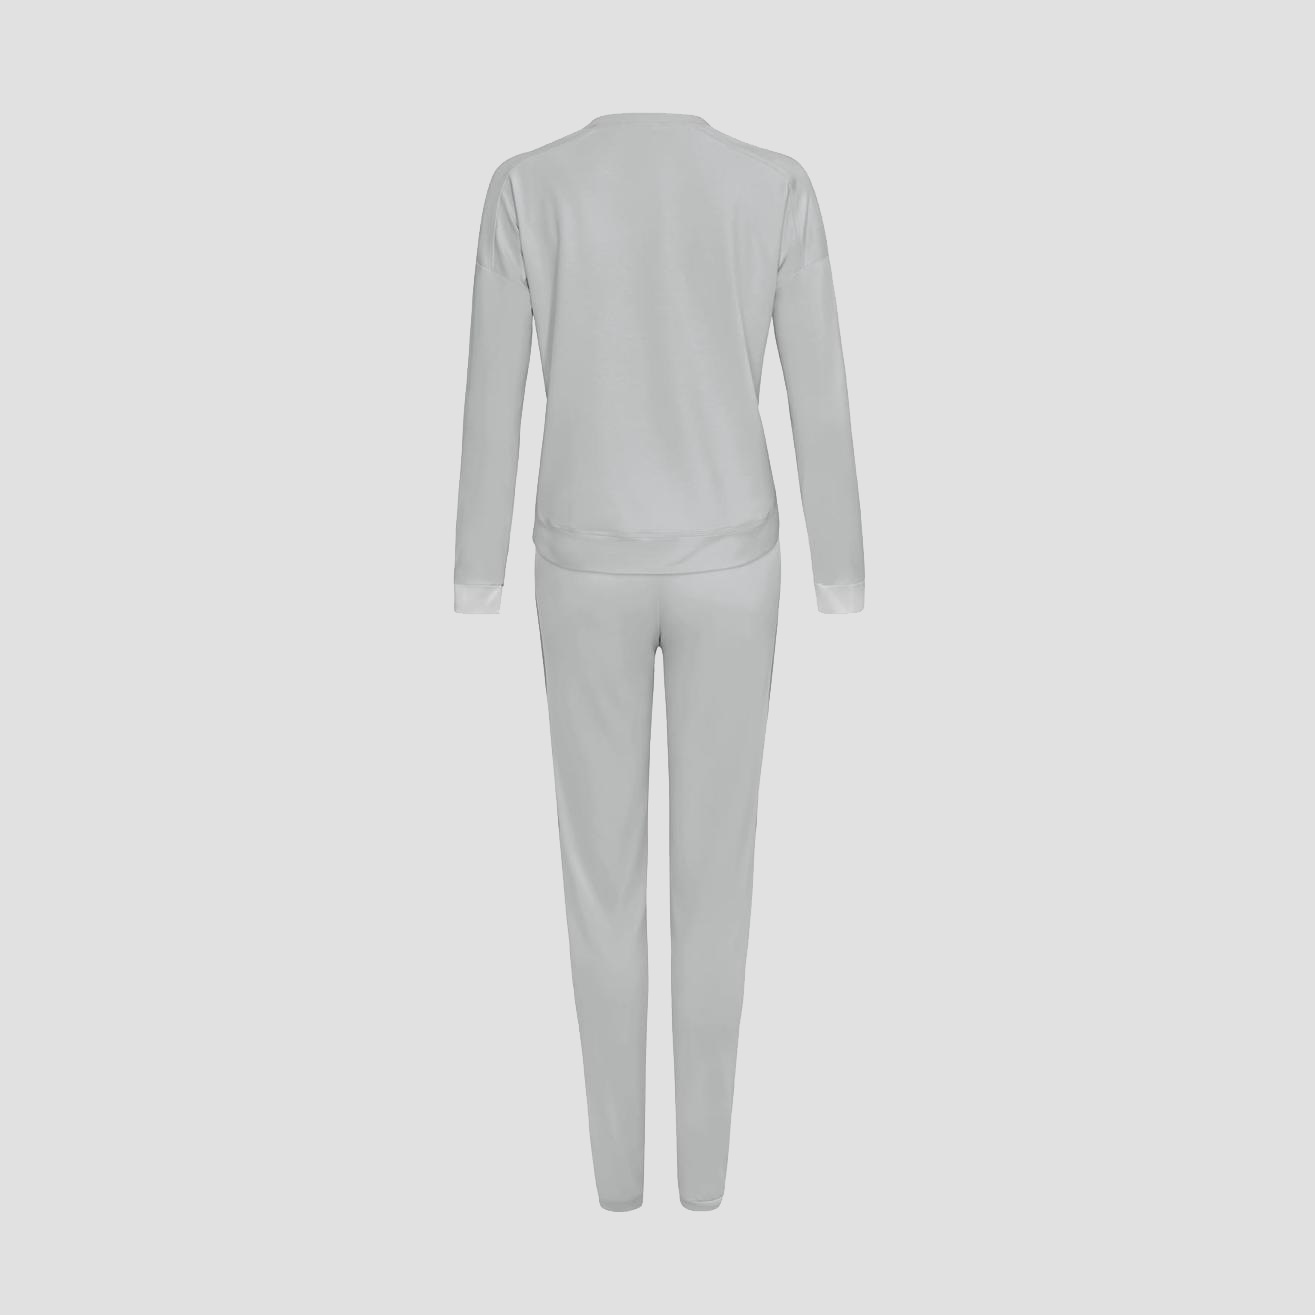 Пижама Togas Рене серая женская M/46, цвет серый, размер 46 - фото 2